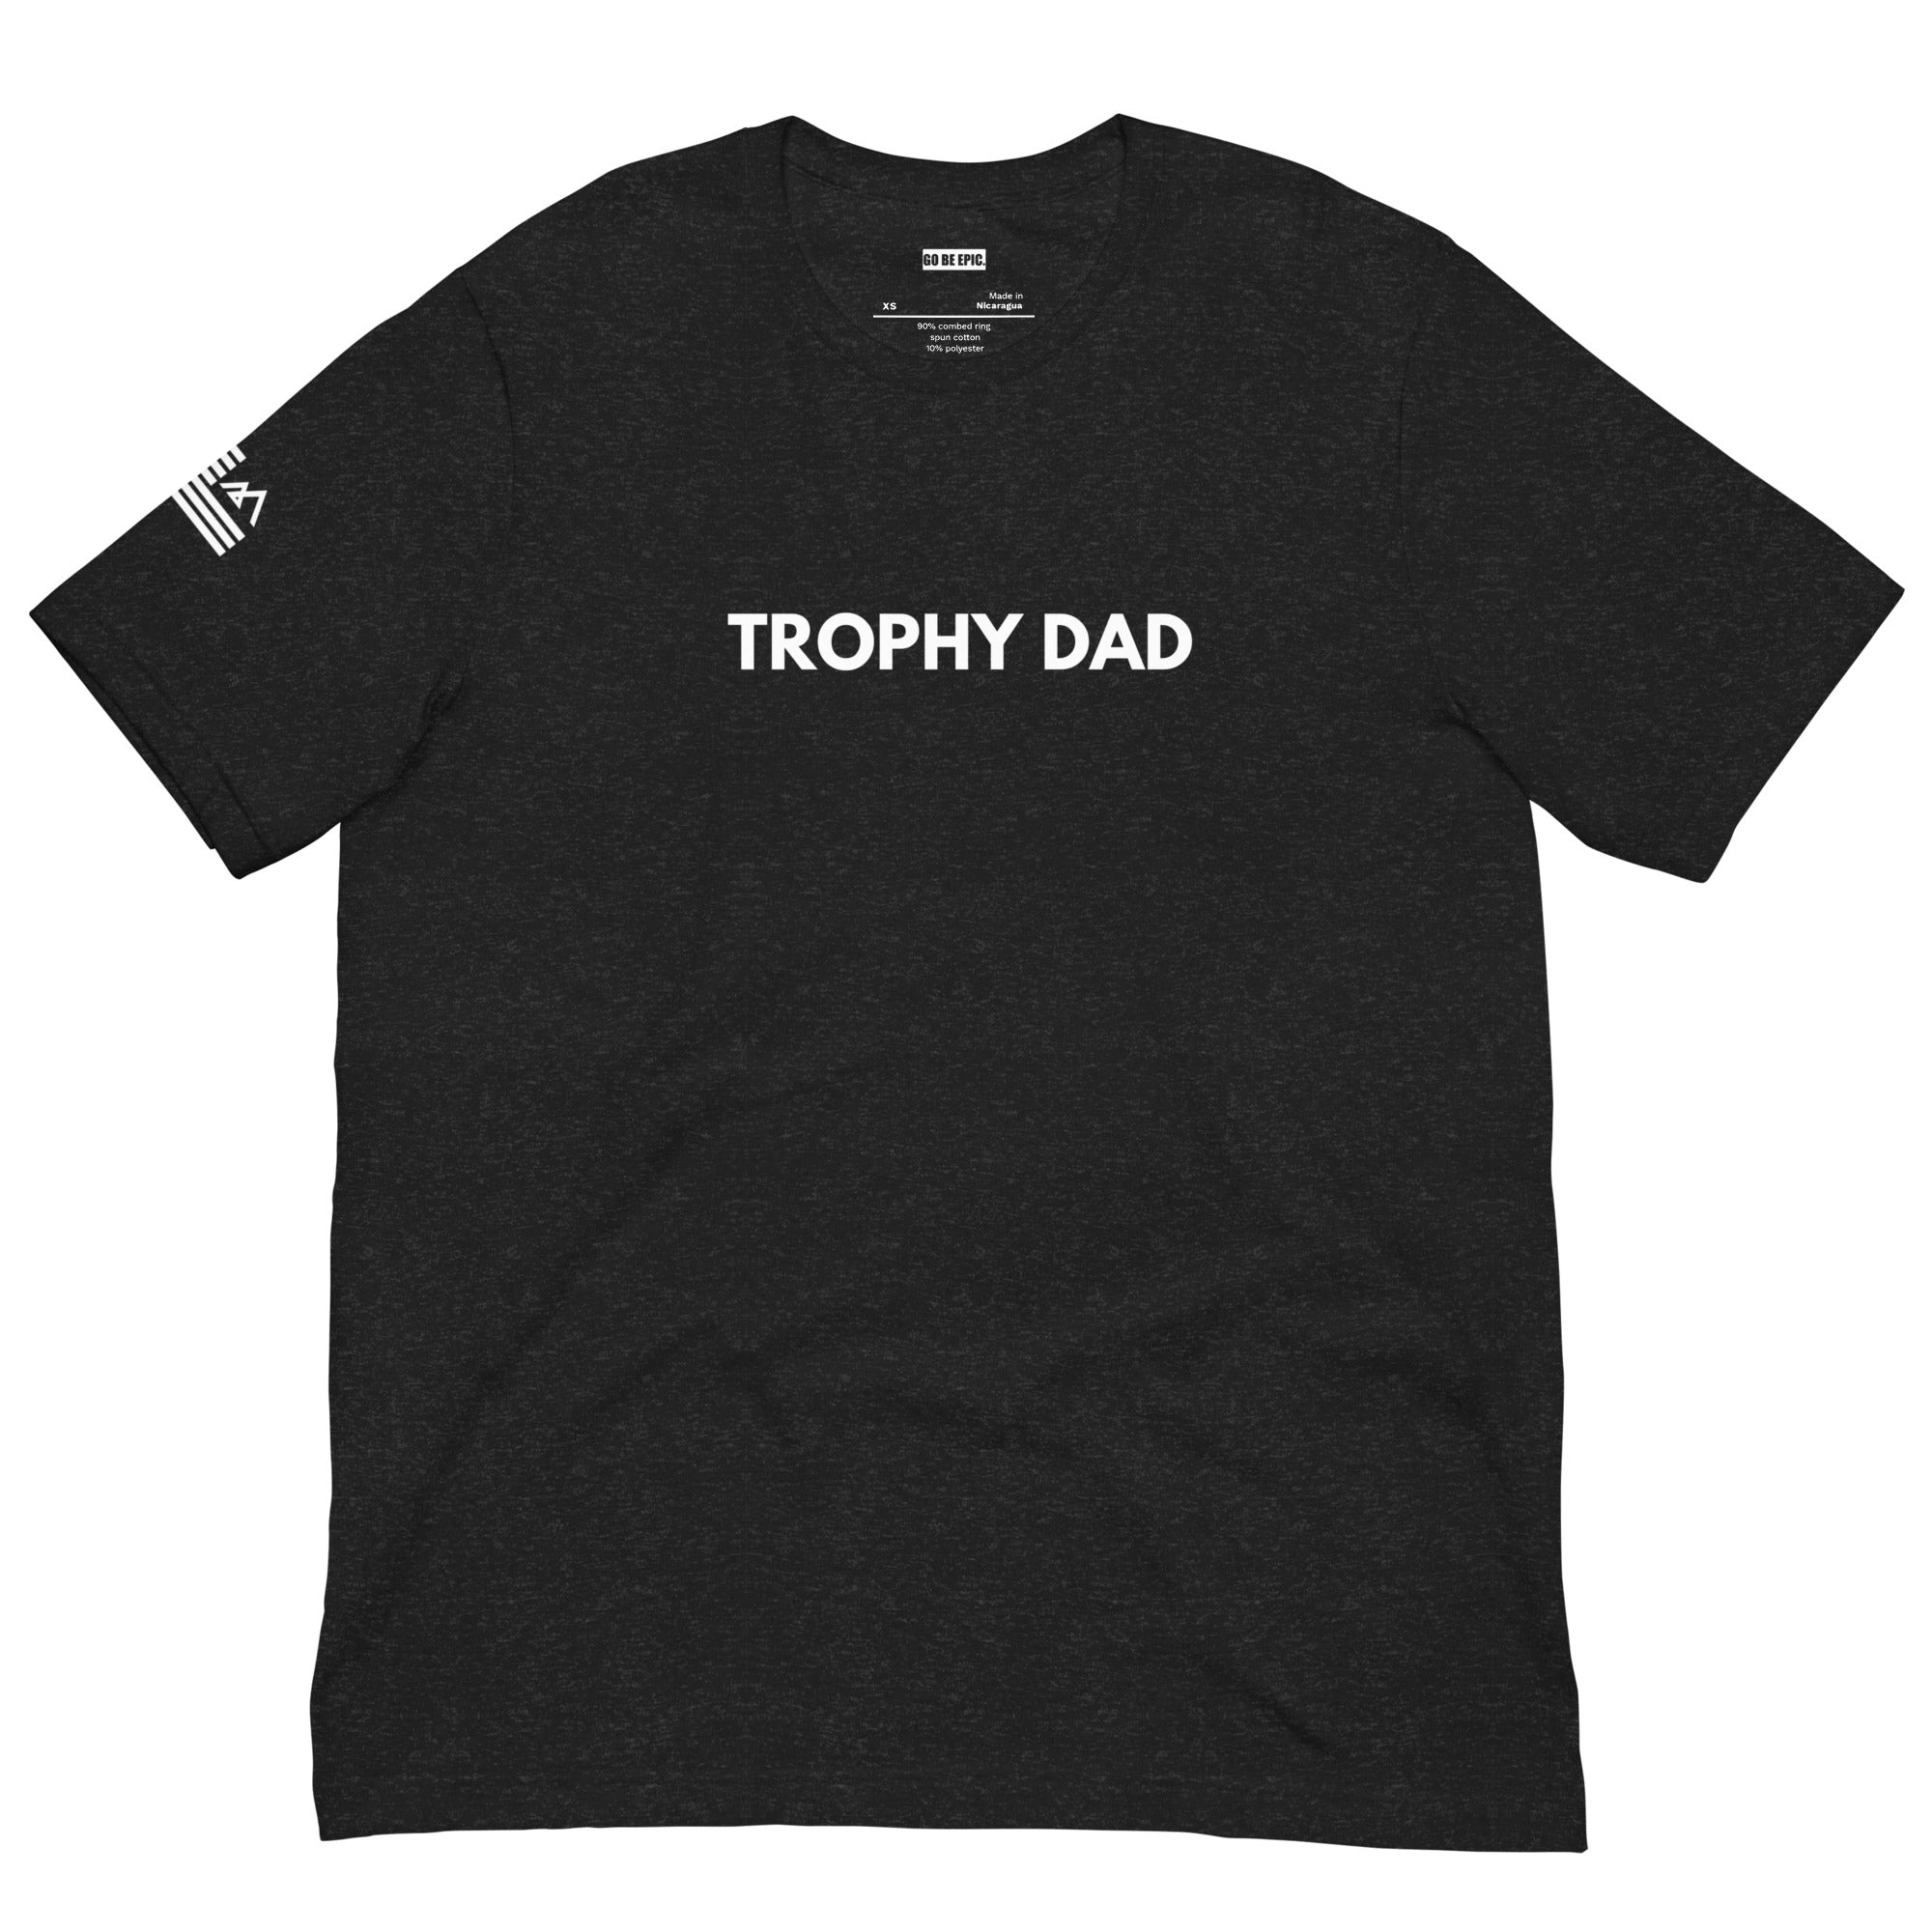 Trophy Dad (Black)